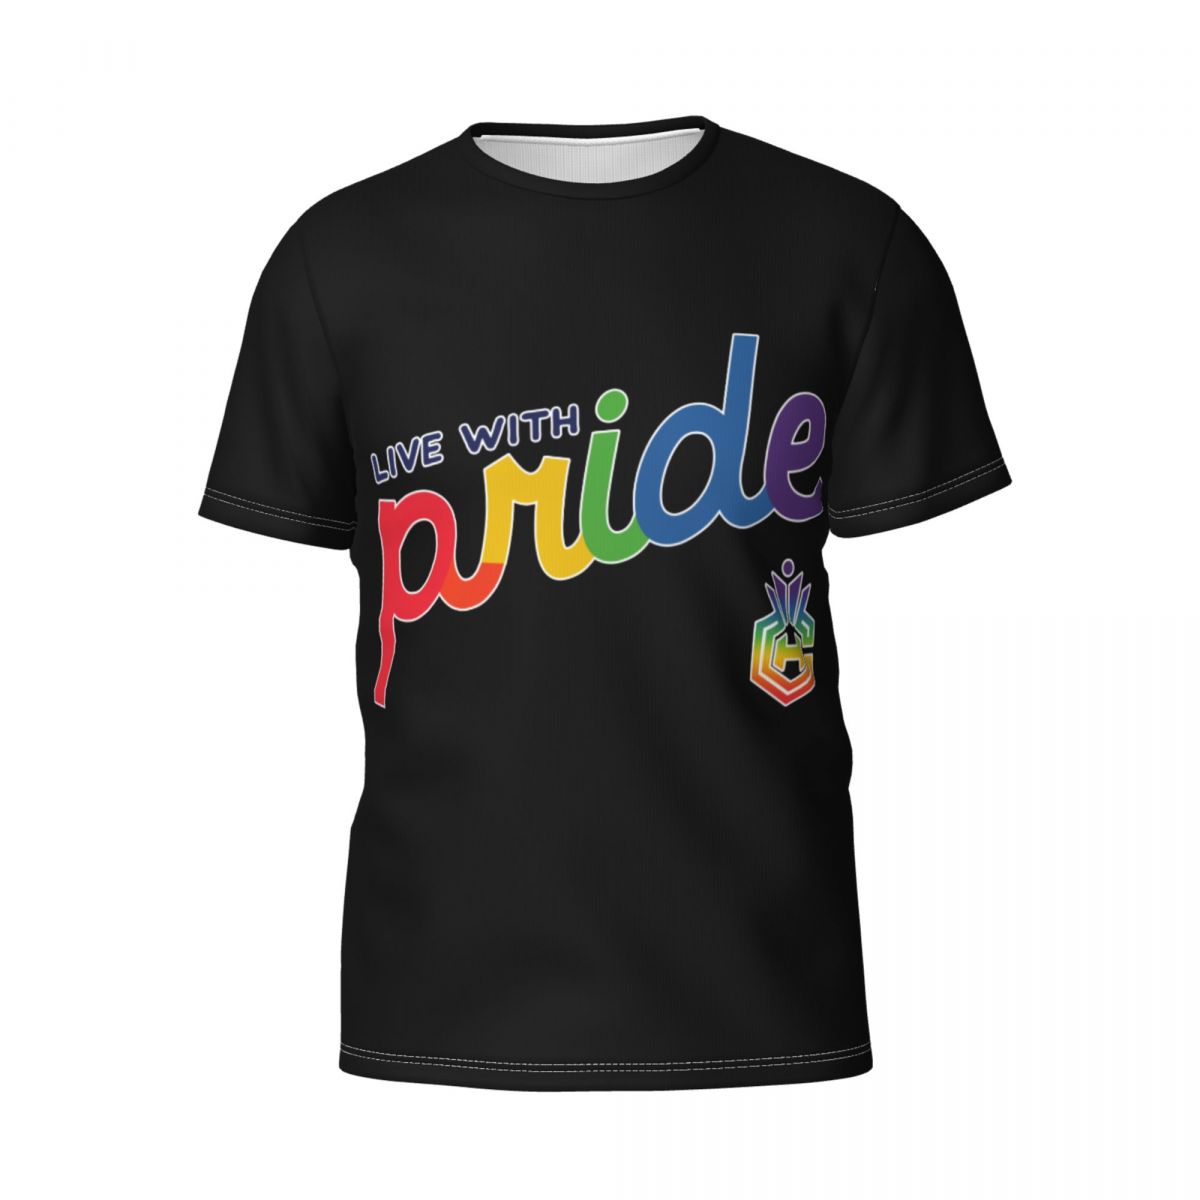 Charlotte Hornets Live With Pride Men's Short Sleeve Shirt